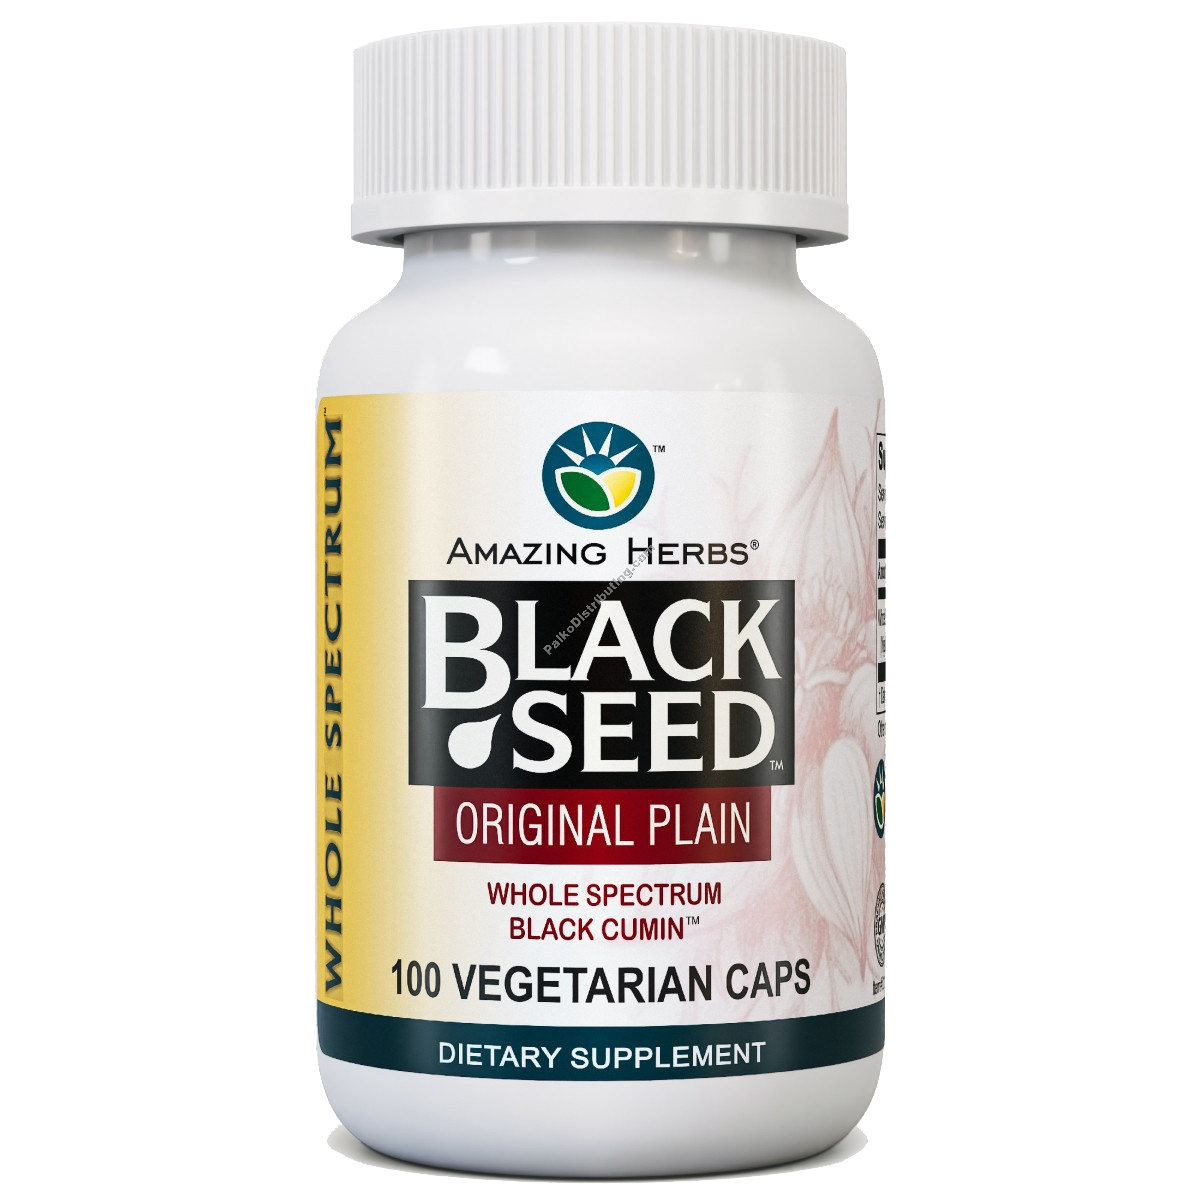 Product Image: Black Seed Original Plain (Cumin)